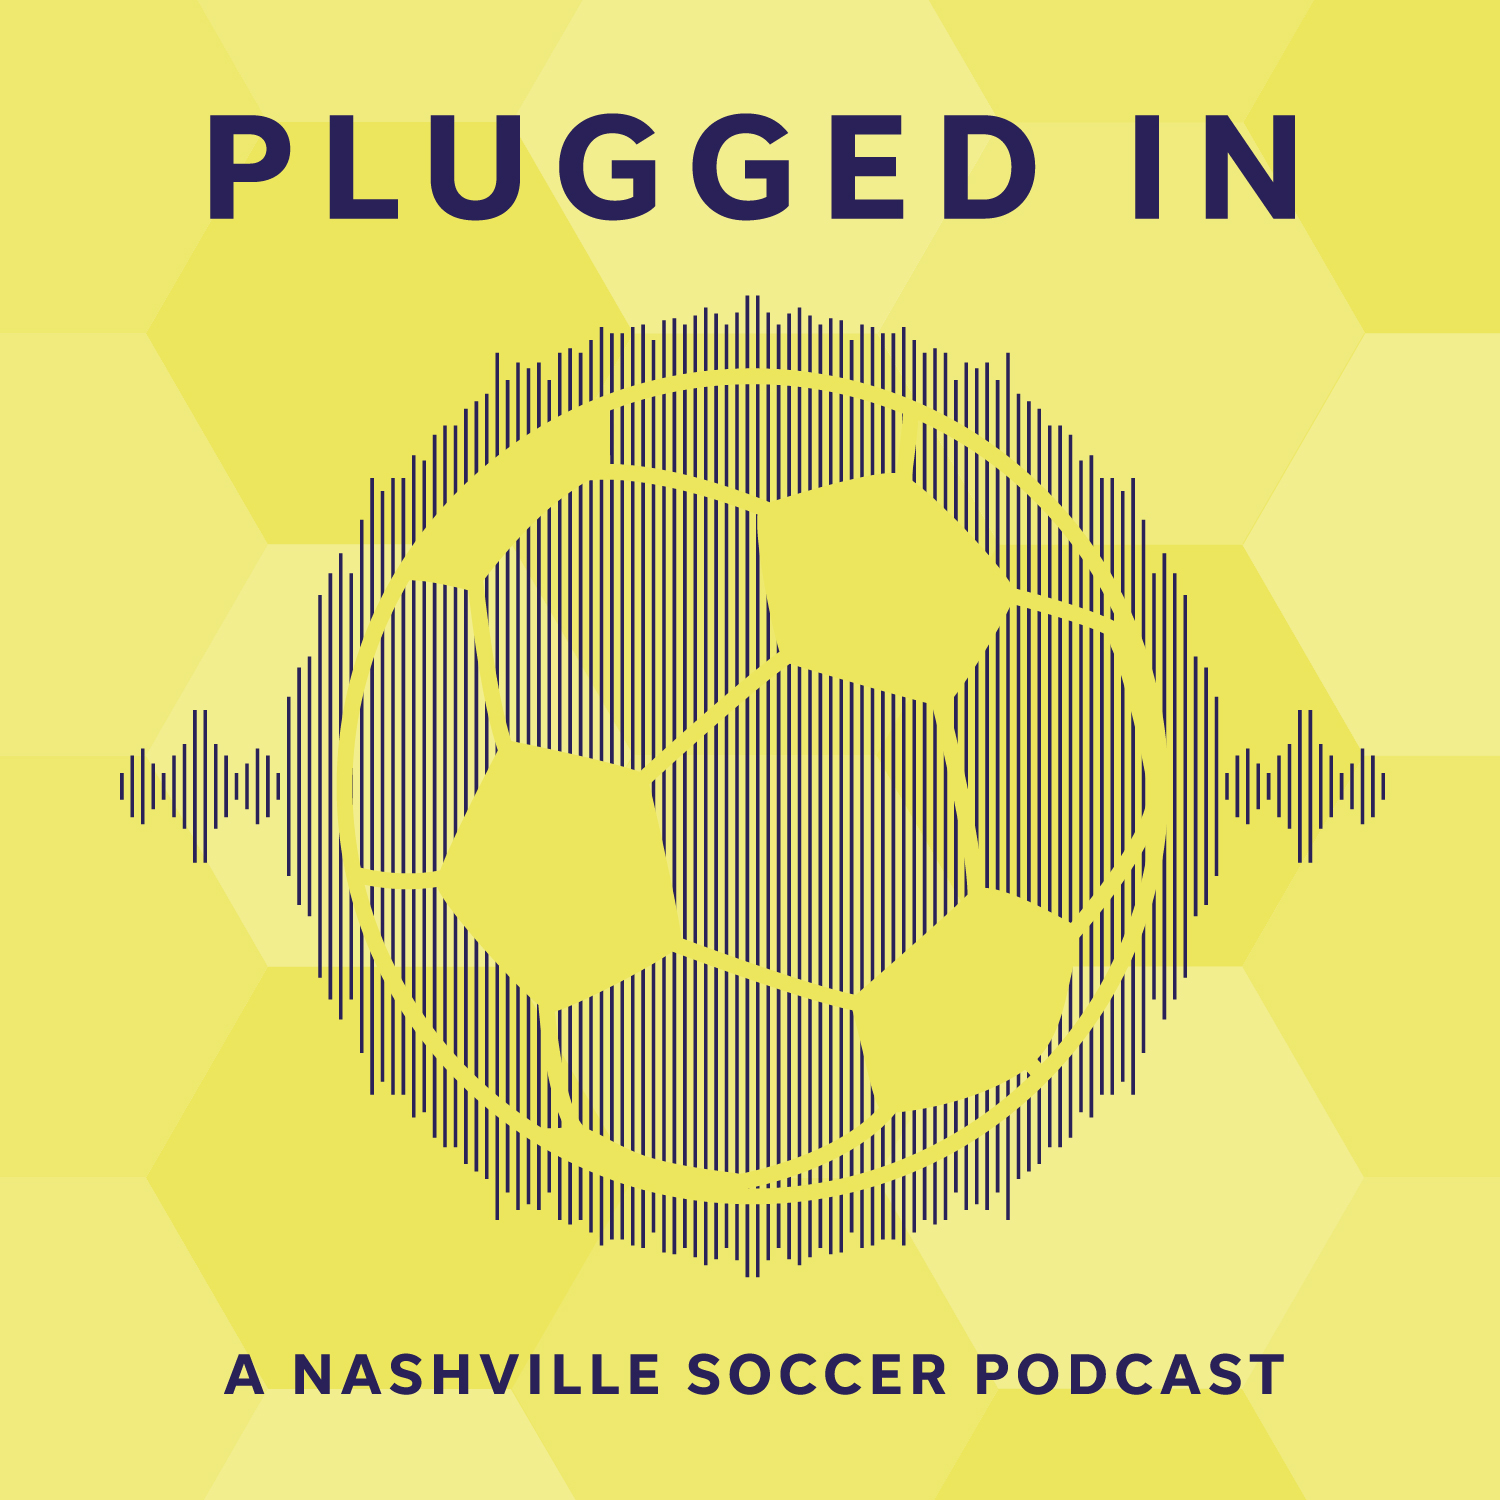 Fox Soccer's Cobi Jones on the growth of MLS, Nashville SC's success